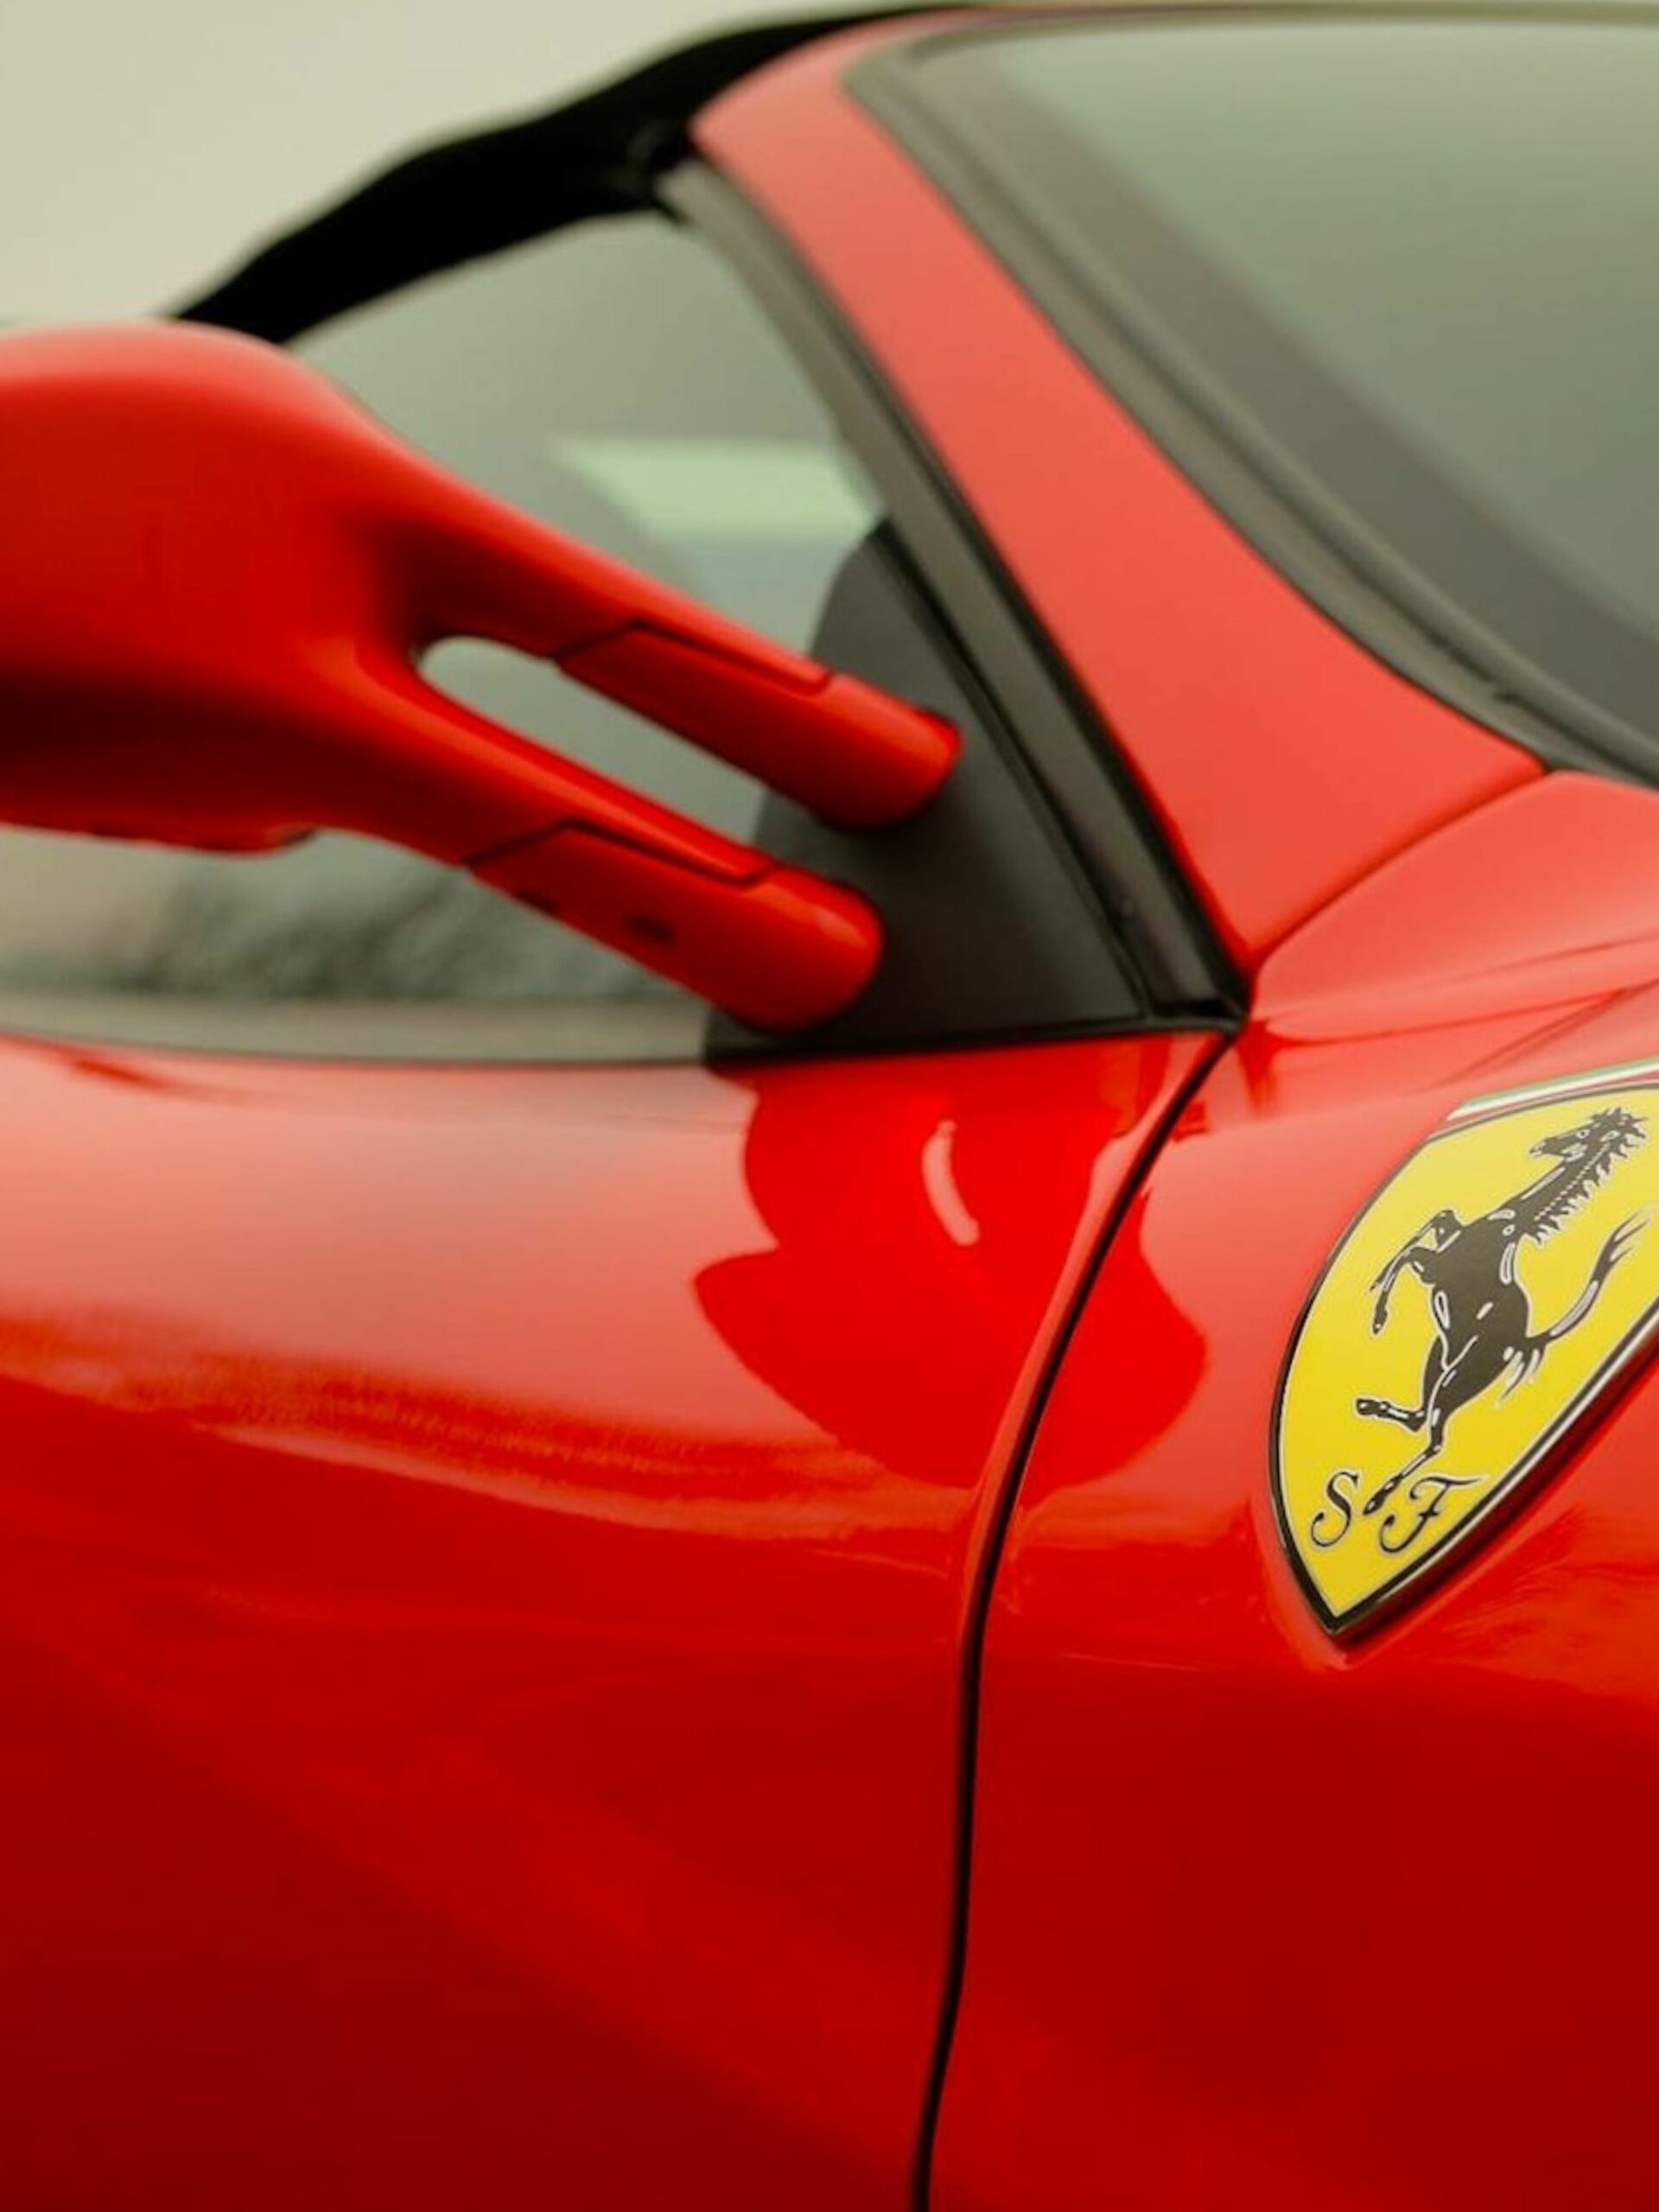 Ferrari, luxury car